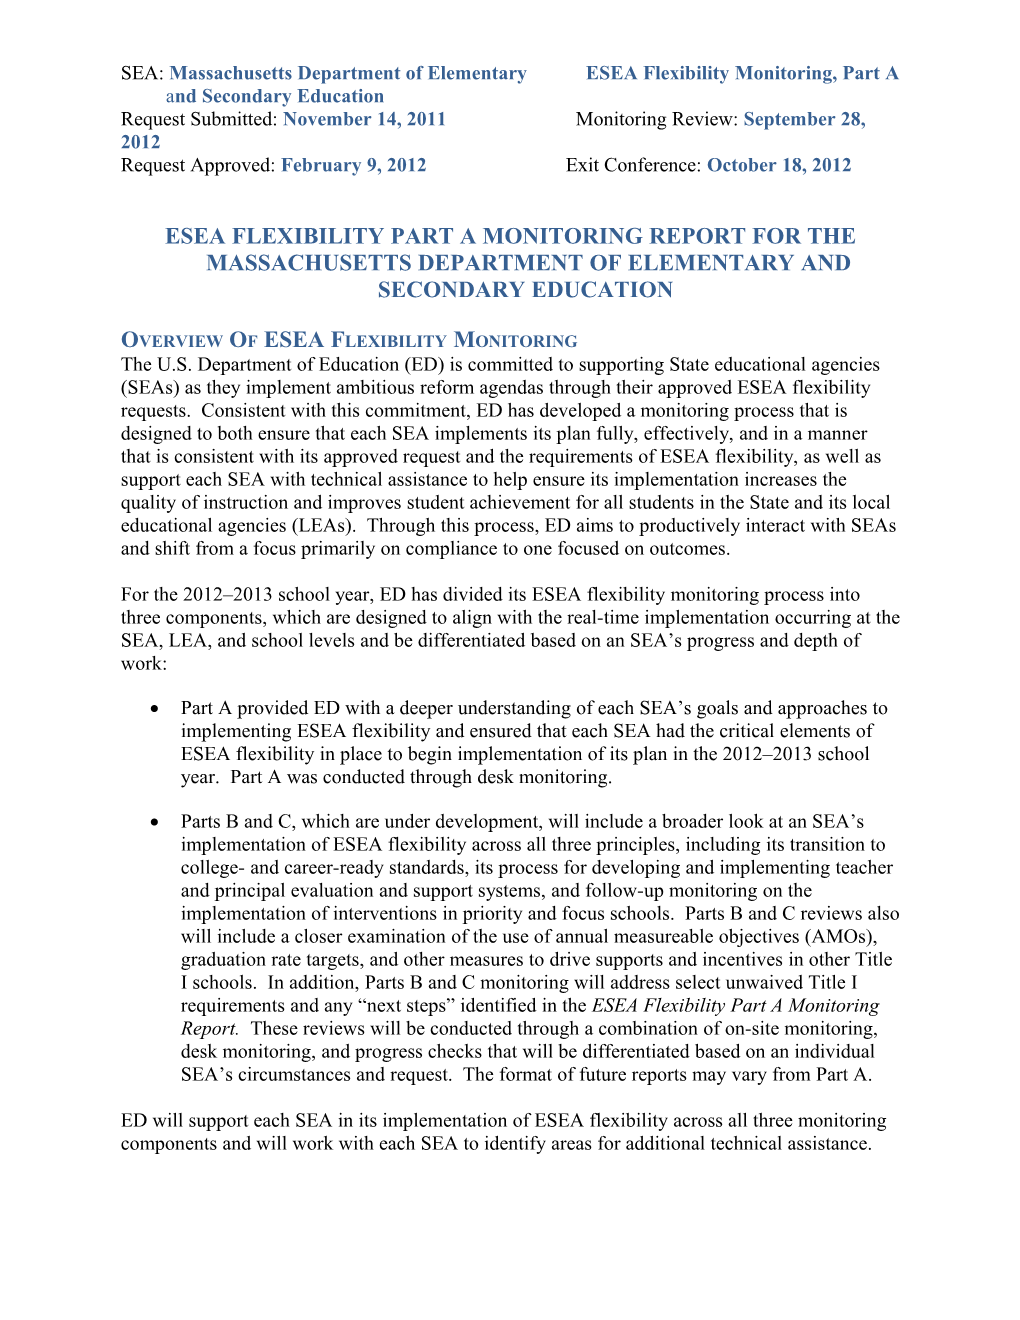 Massachusetts ESEA Flexibility Monitoring Part a Report